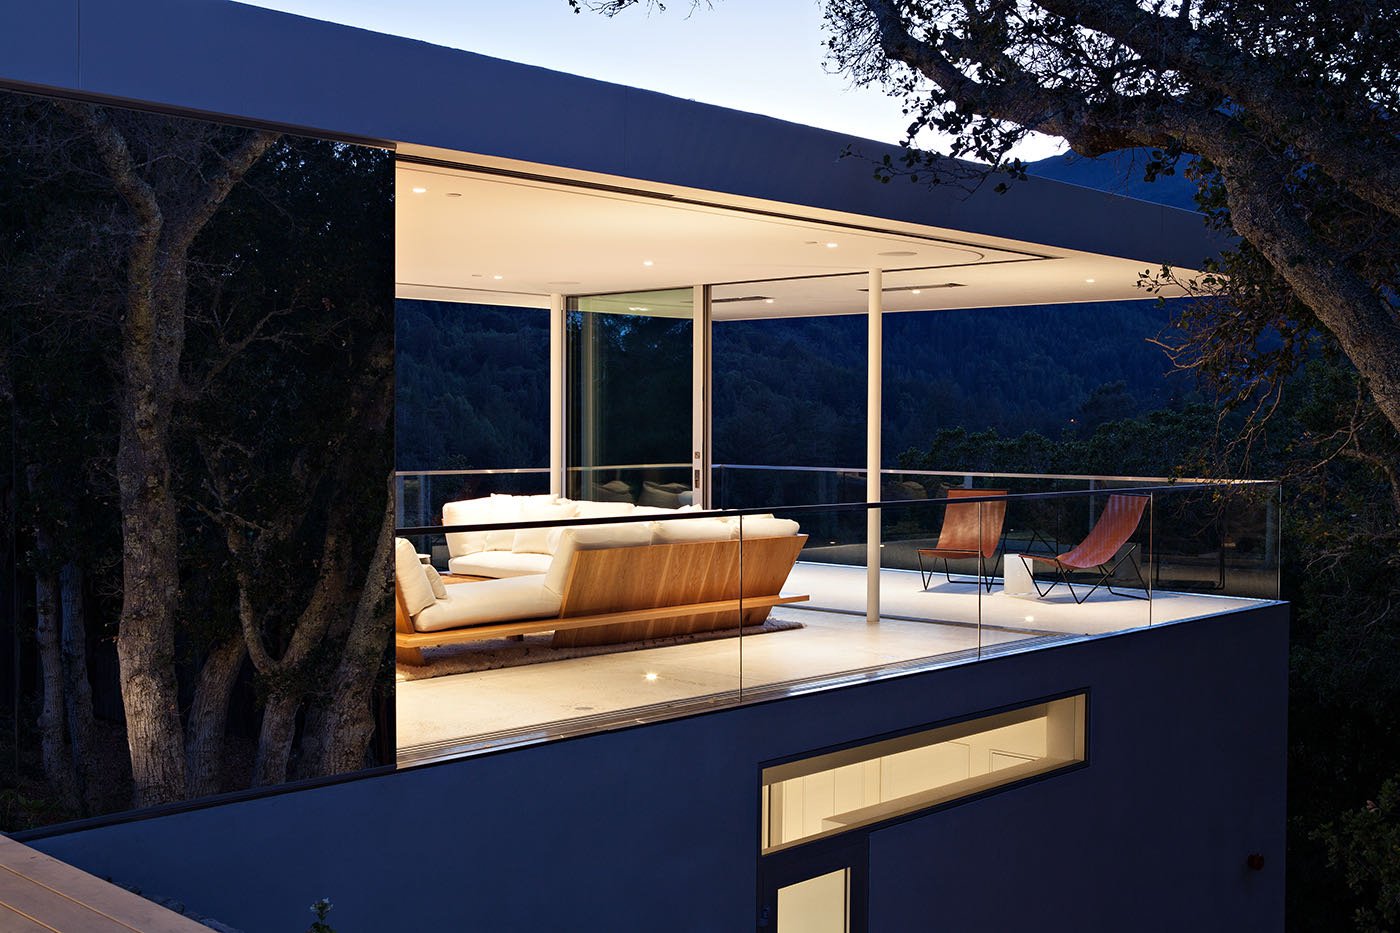 turner residence - jensen architects - living exterior night